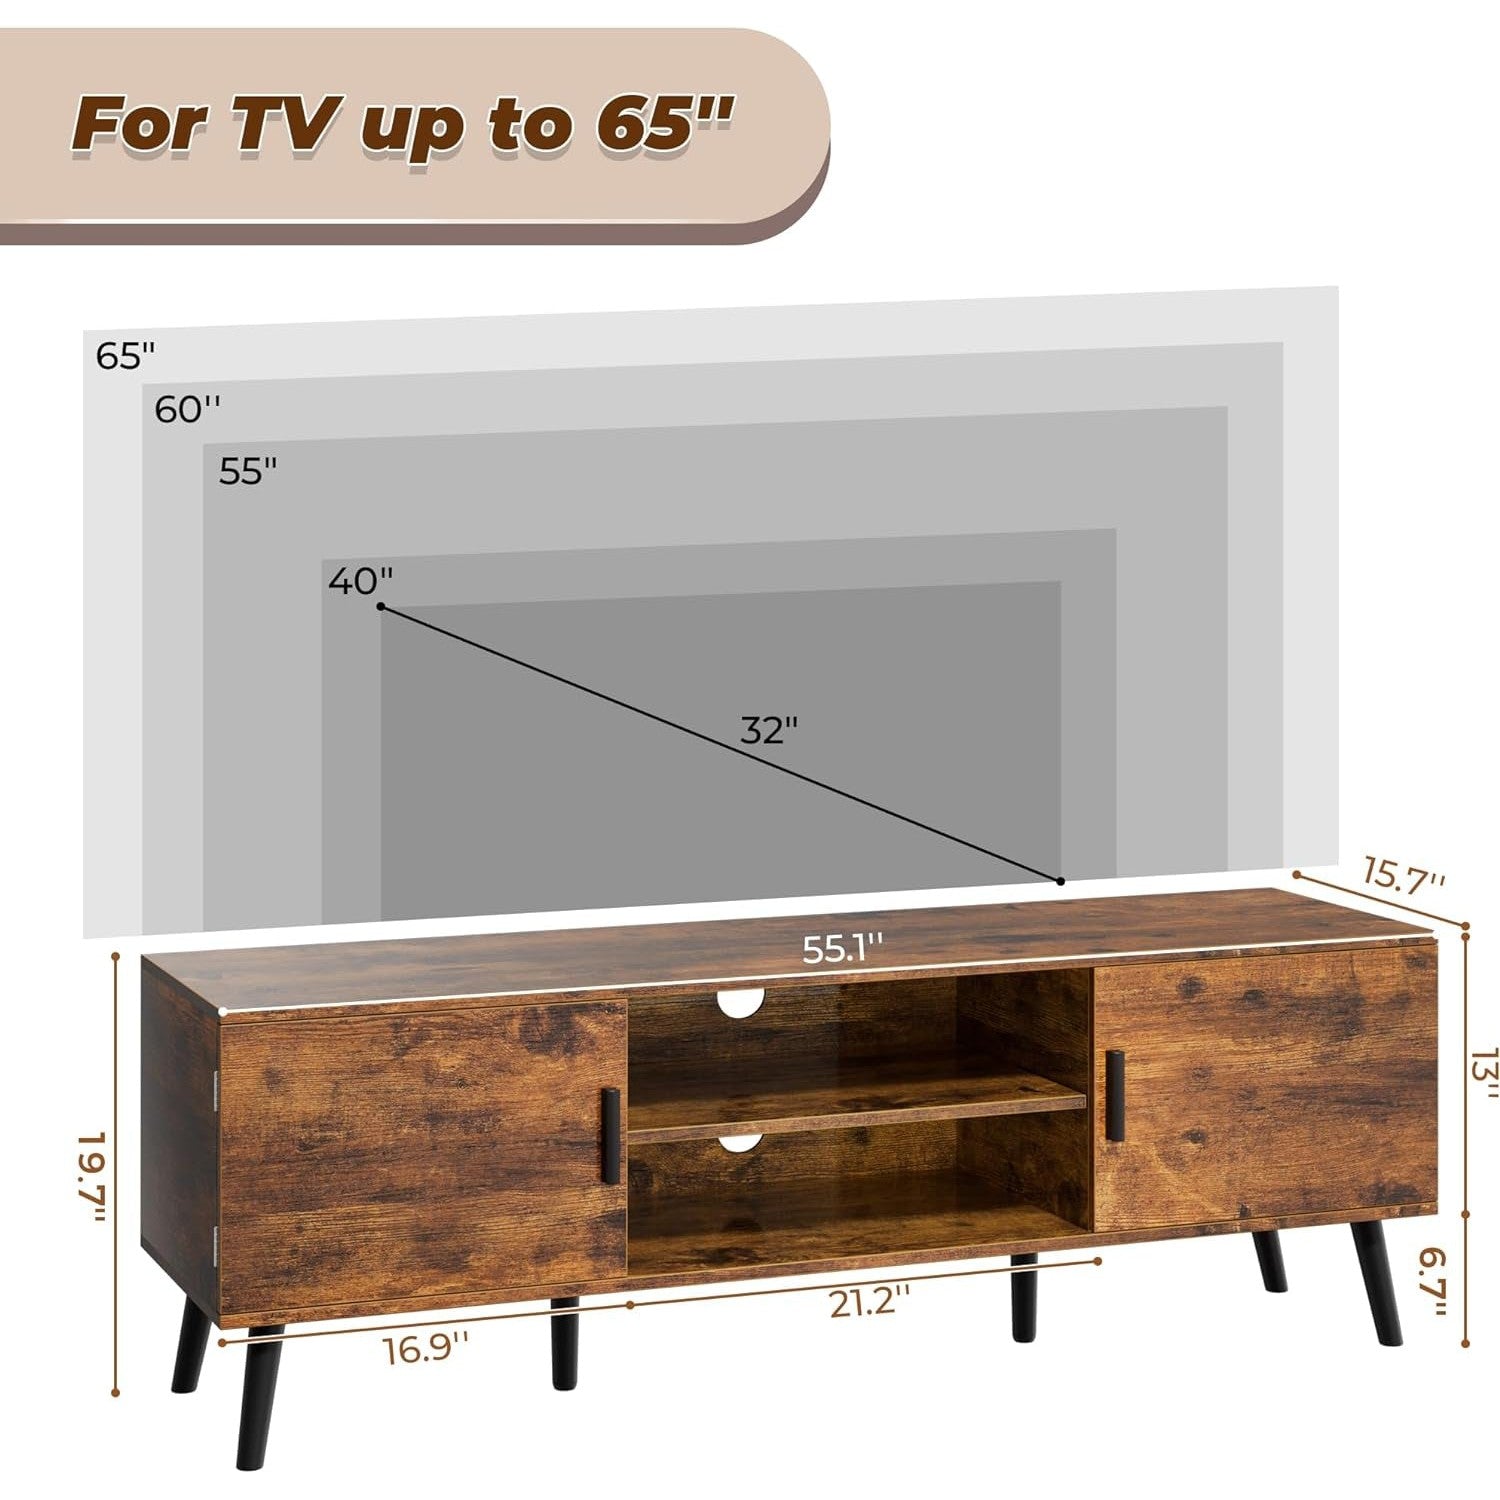 SUPERJARE TV Stand for 55 Inch TV, Adjustable Shelf, 2 Cabinets